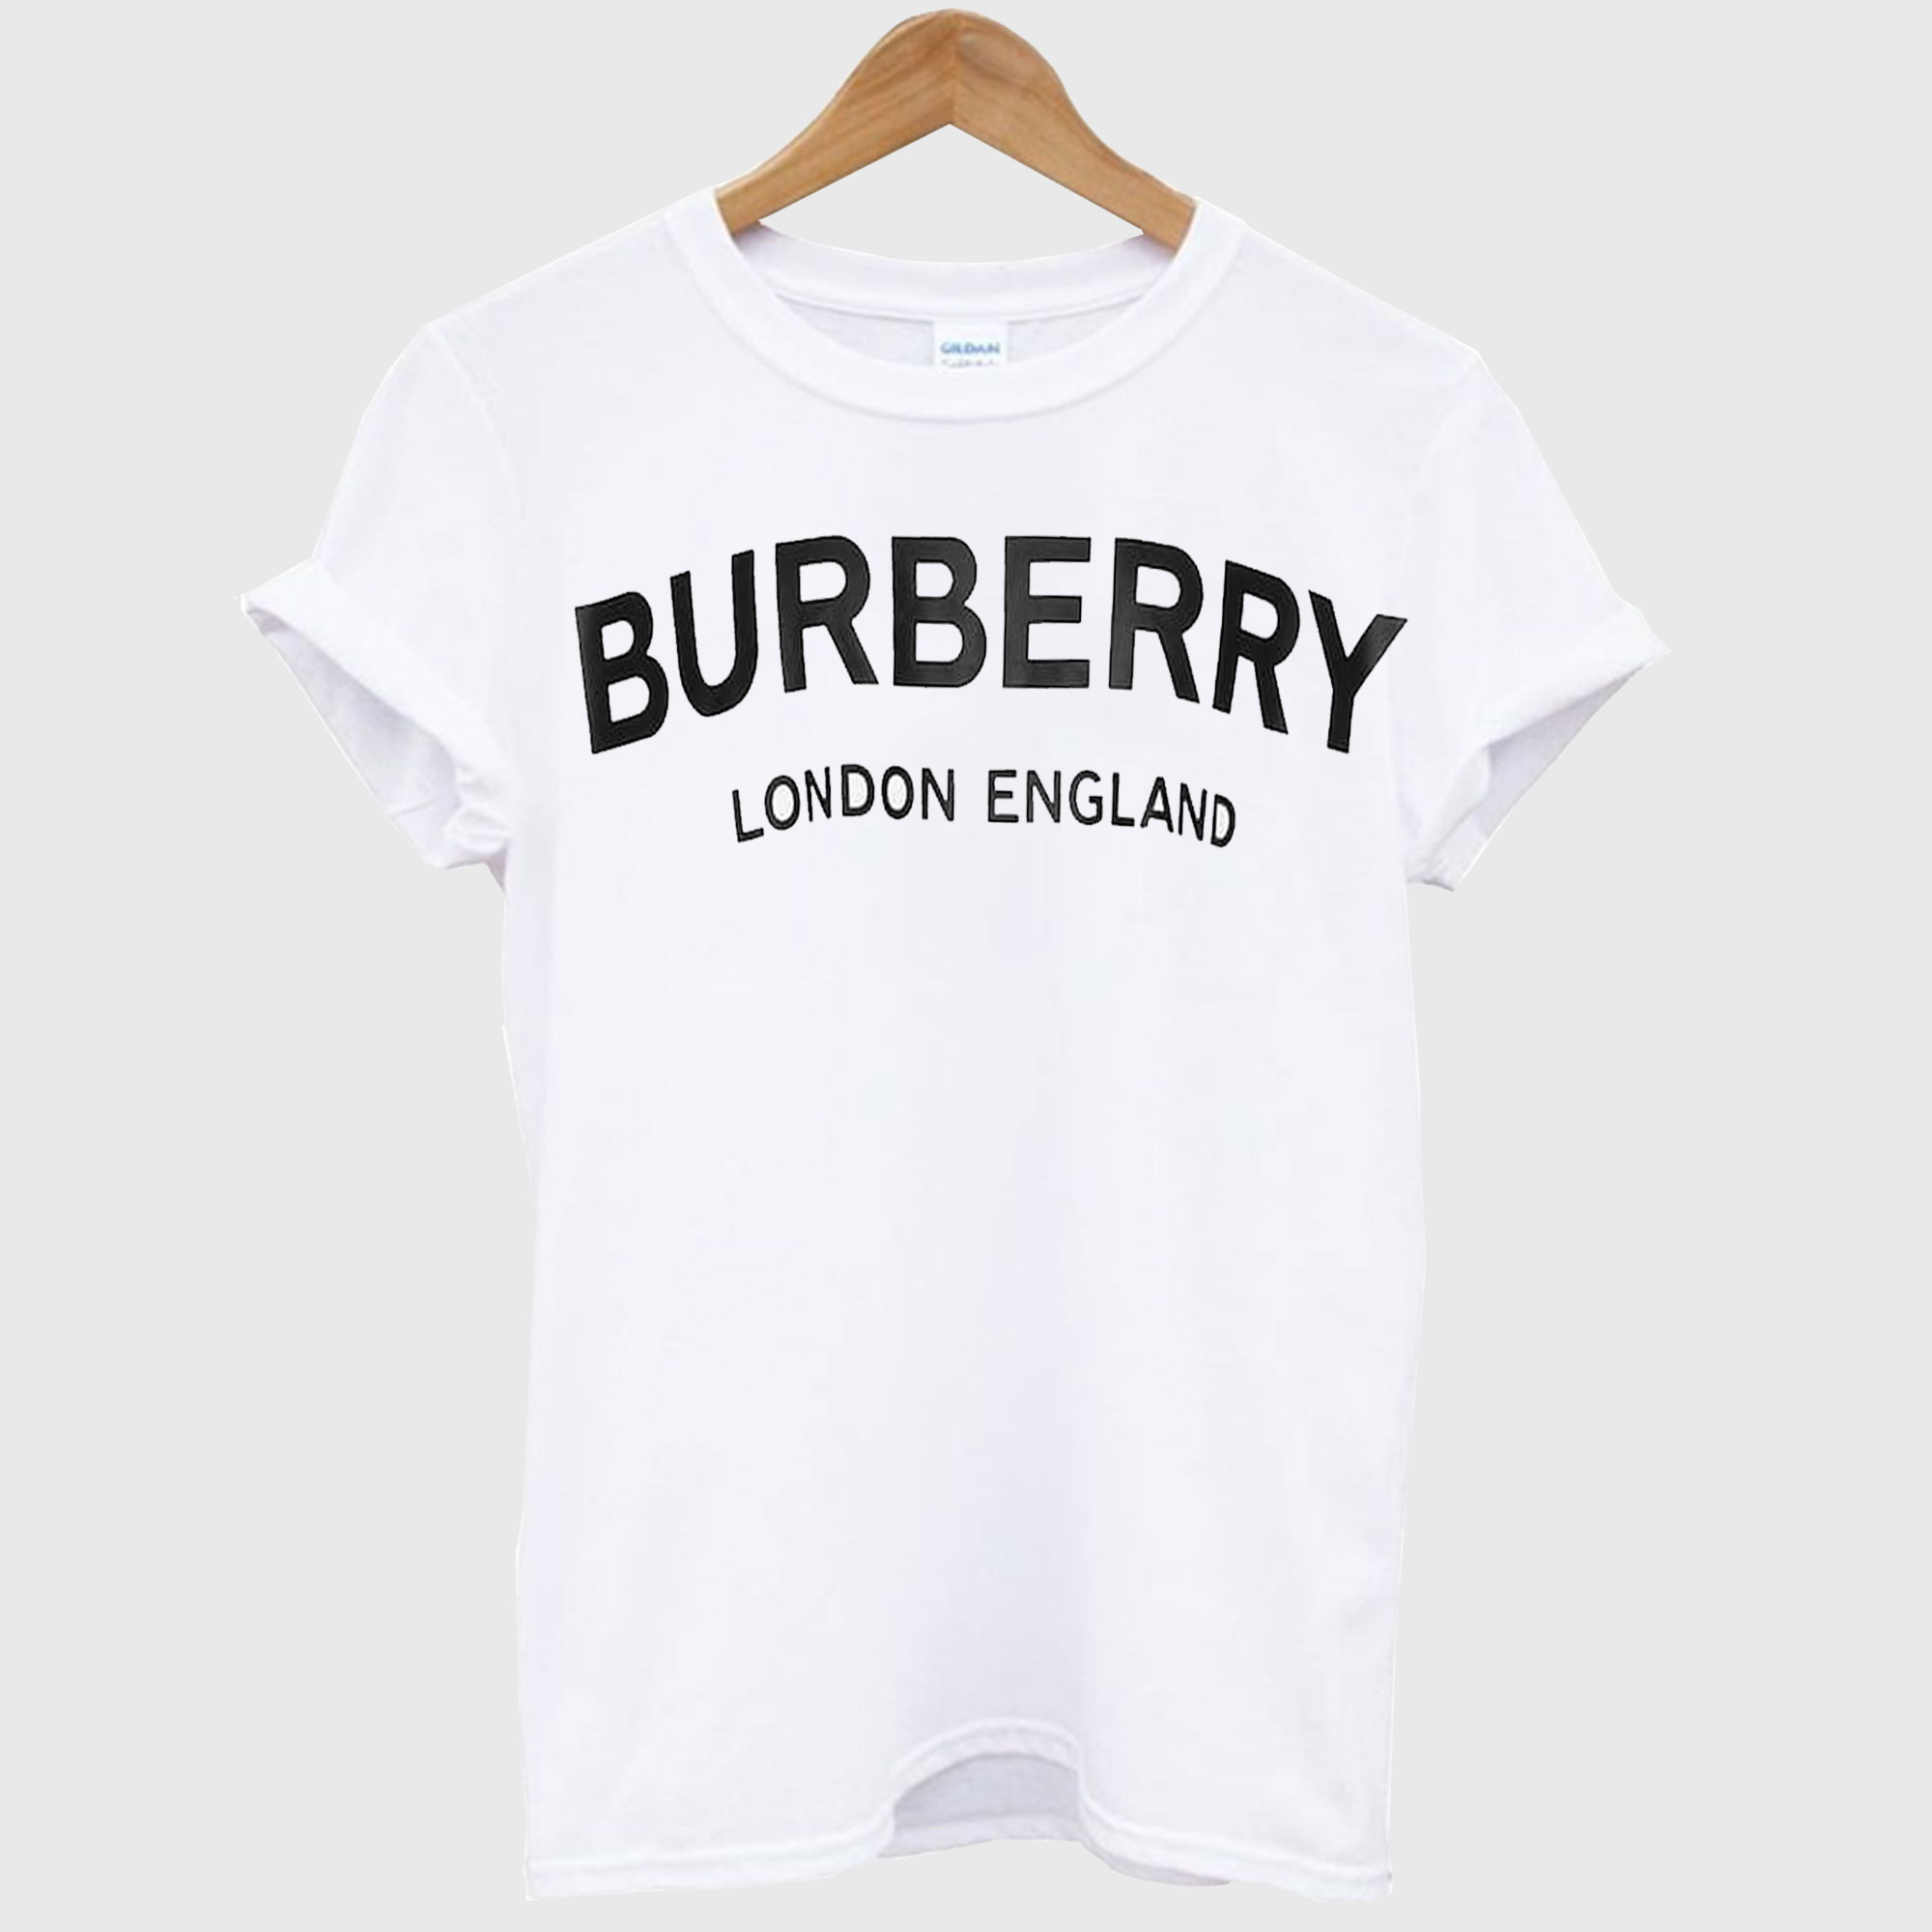 burberry london england tee